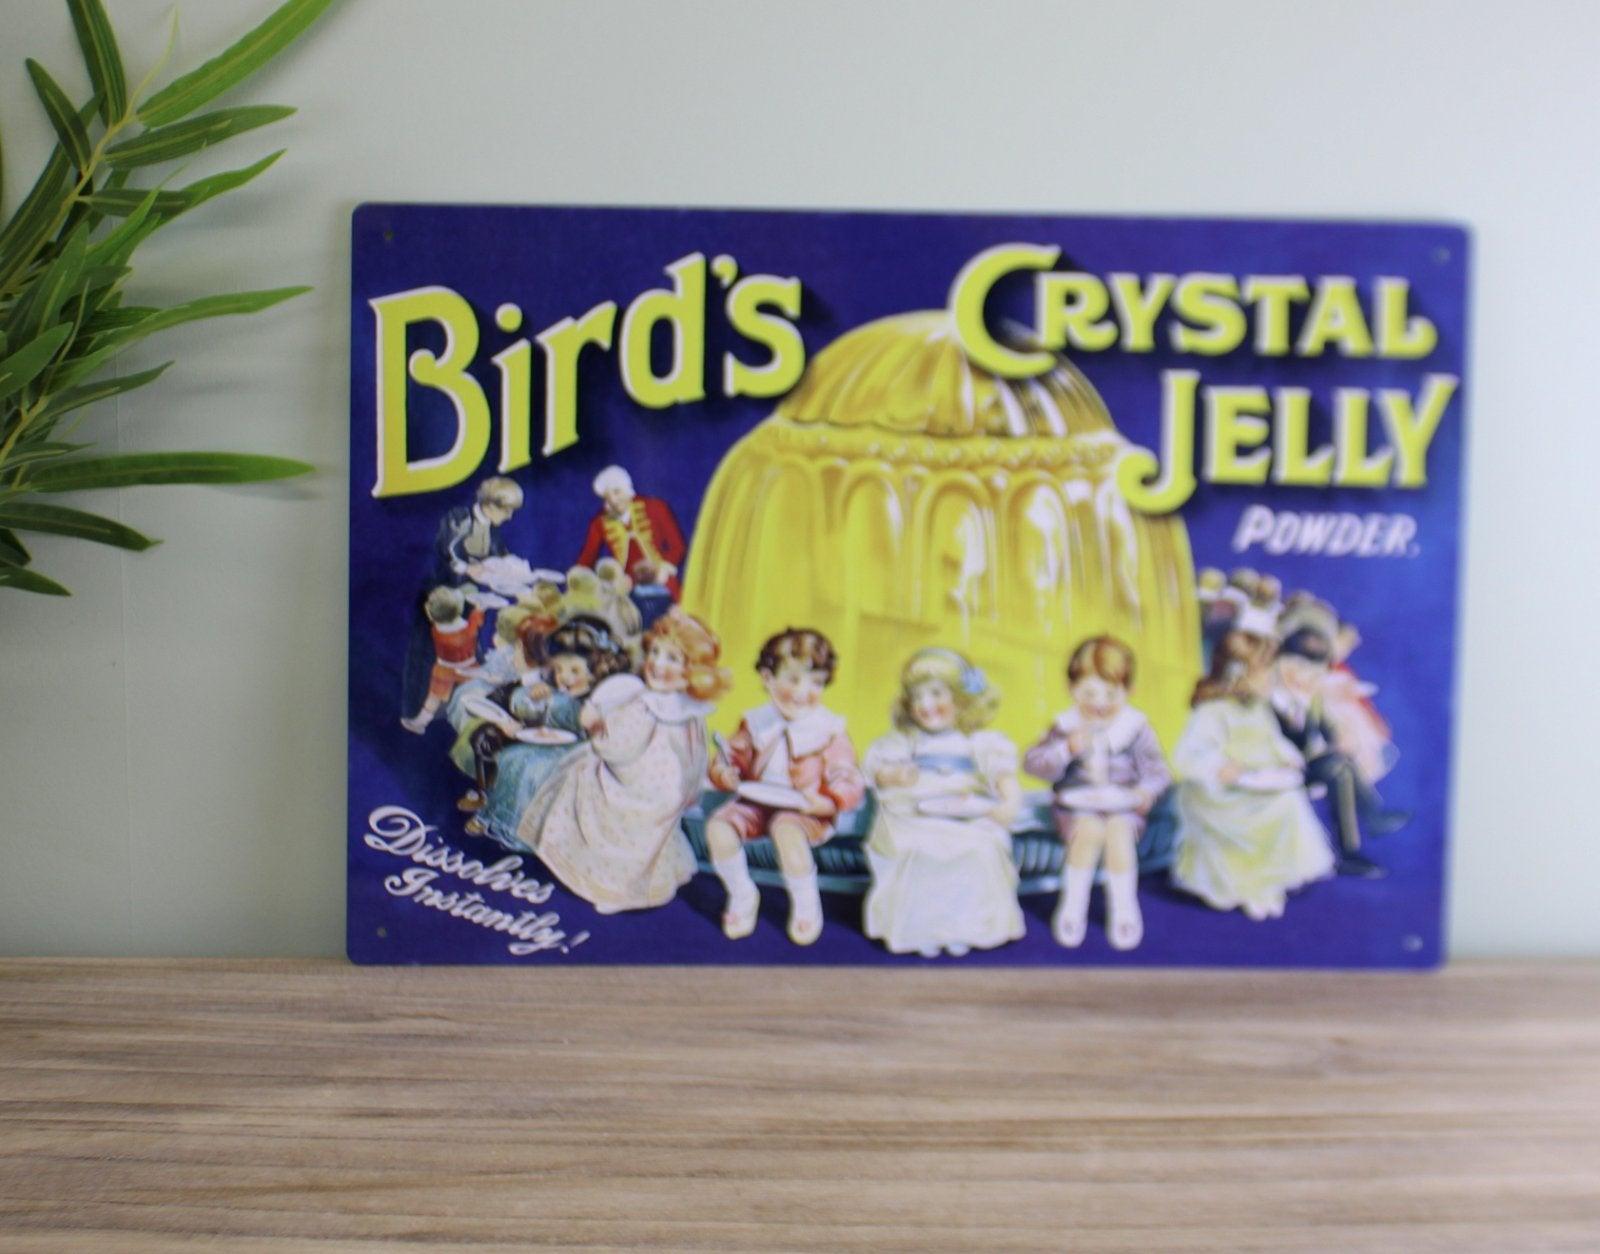 View Vintage Metal Sign Retro Advertising Birds Crystal Jelly Powder information